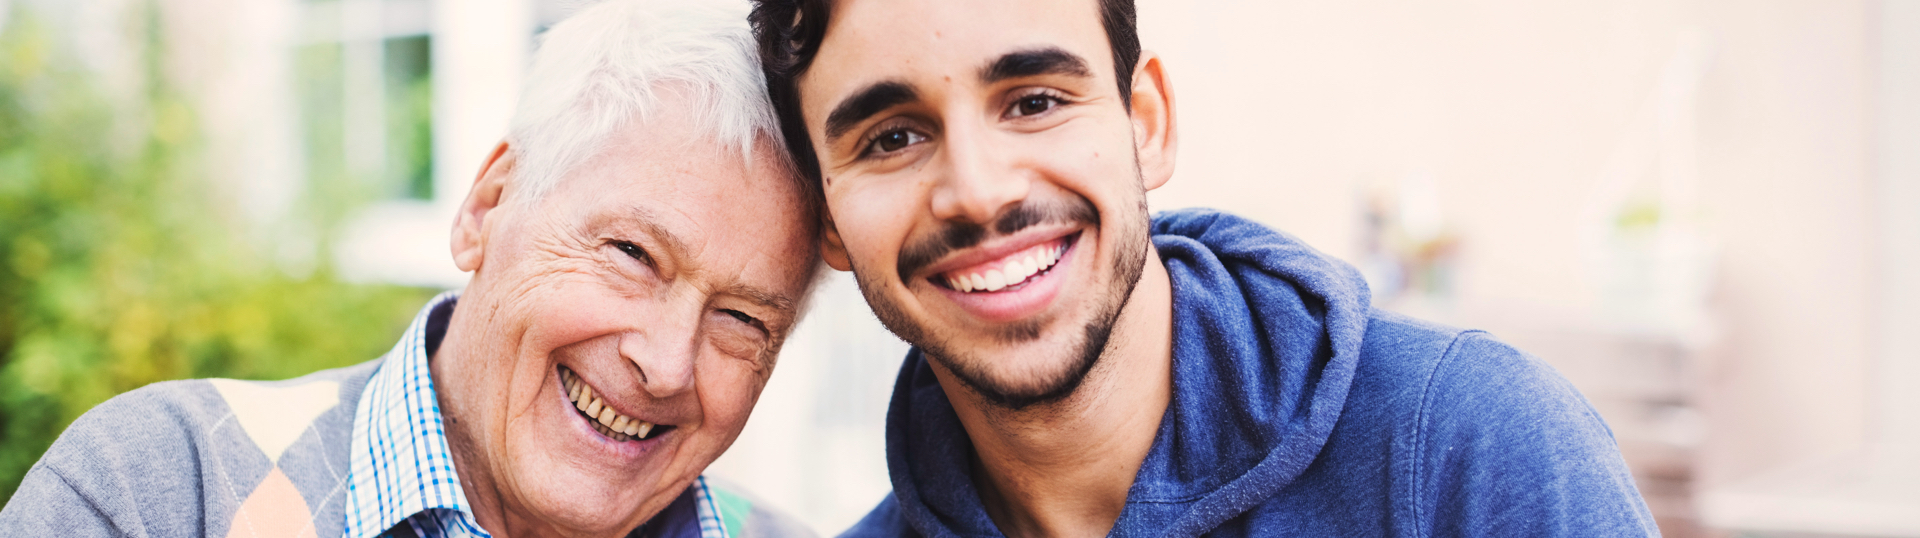 senior man smiling with younger man